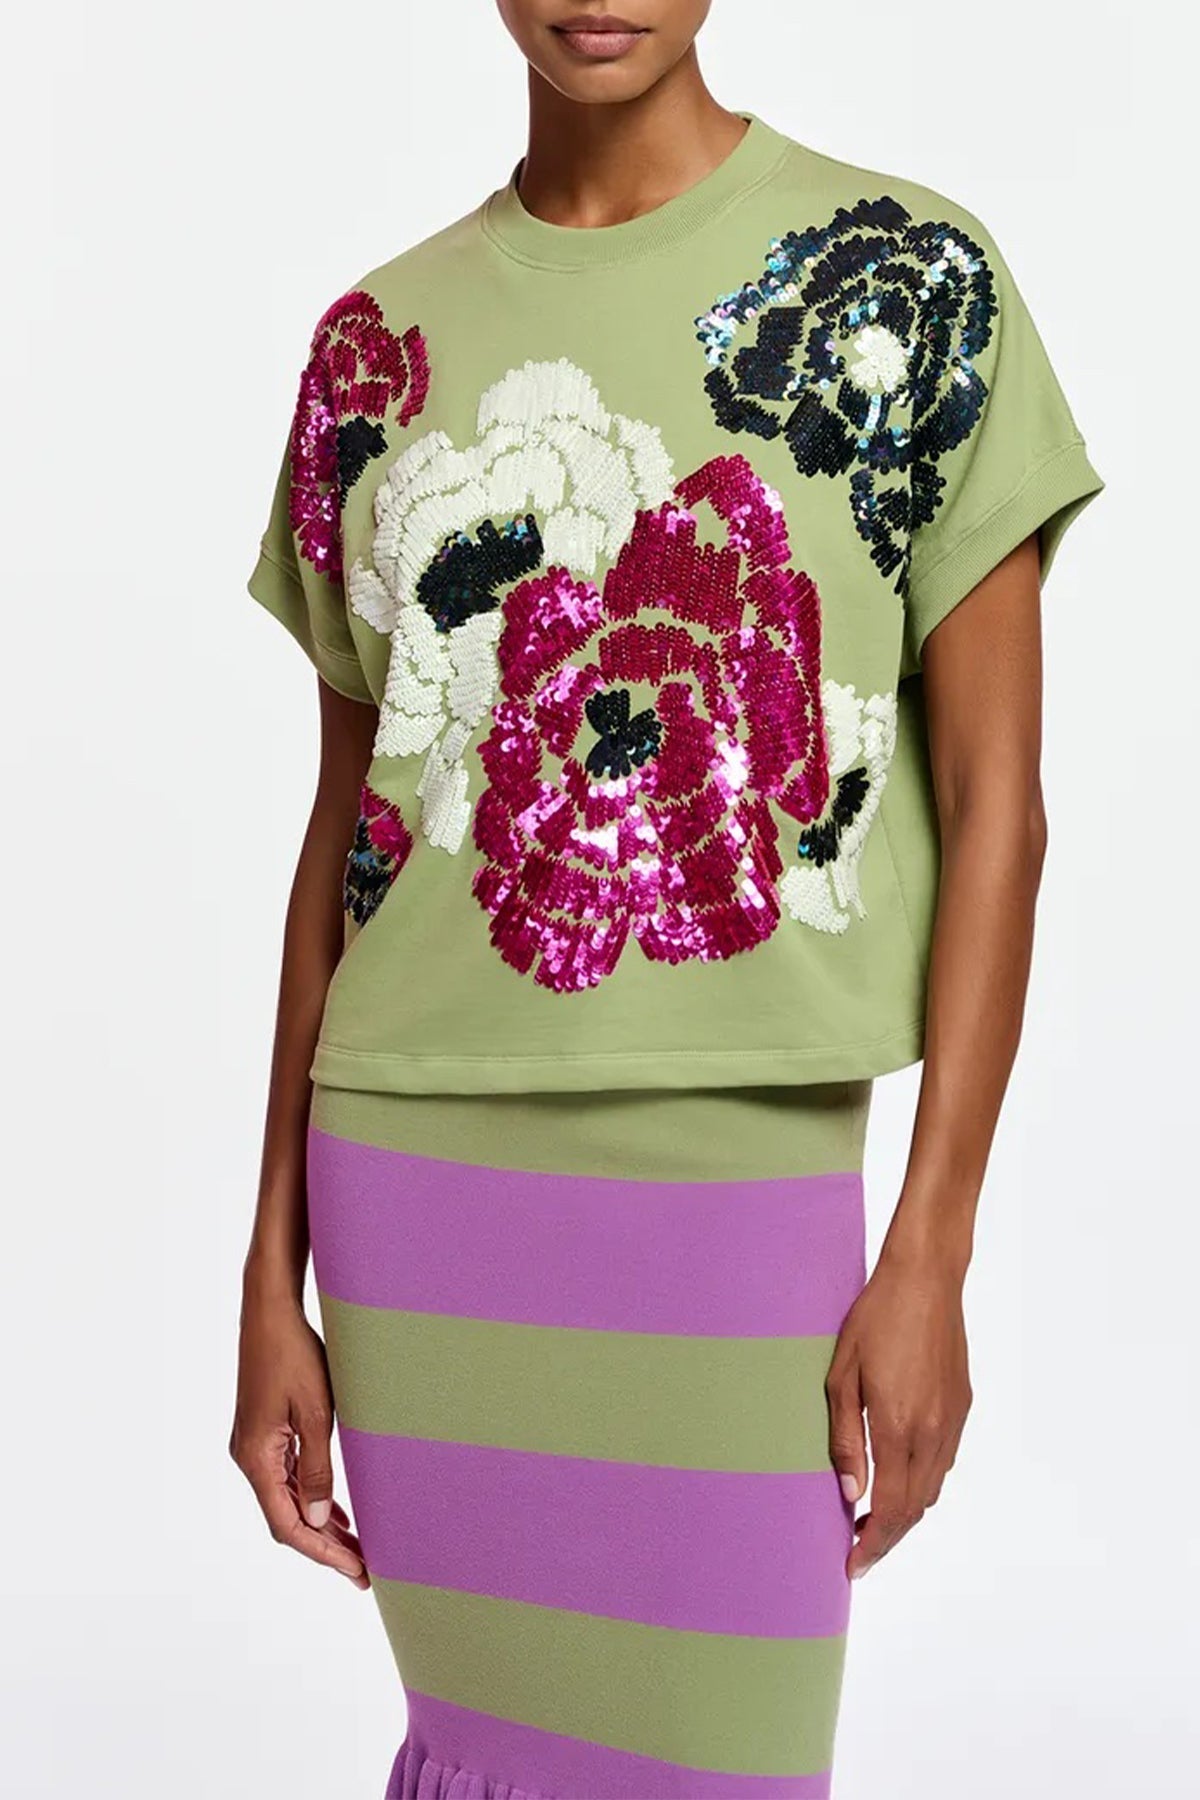 Floraly Sweatshirt in Light Khaki - shop - olivia.com